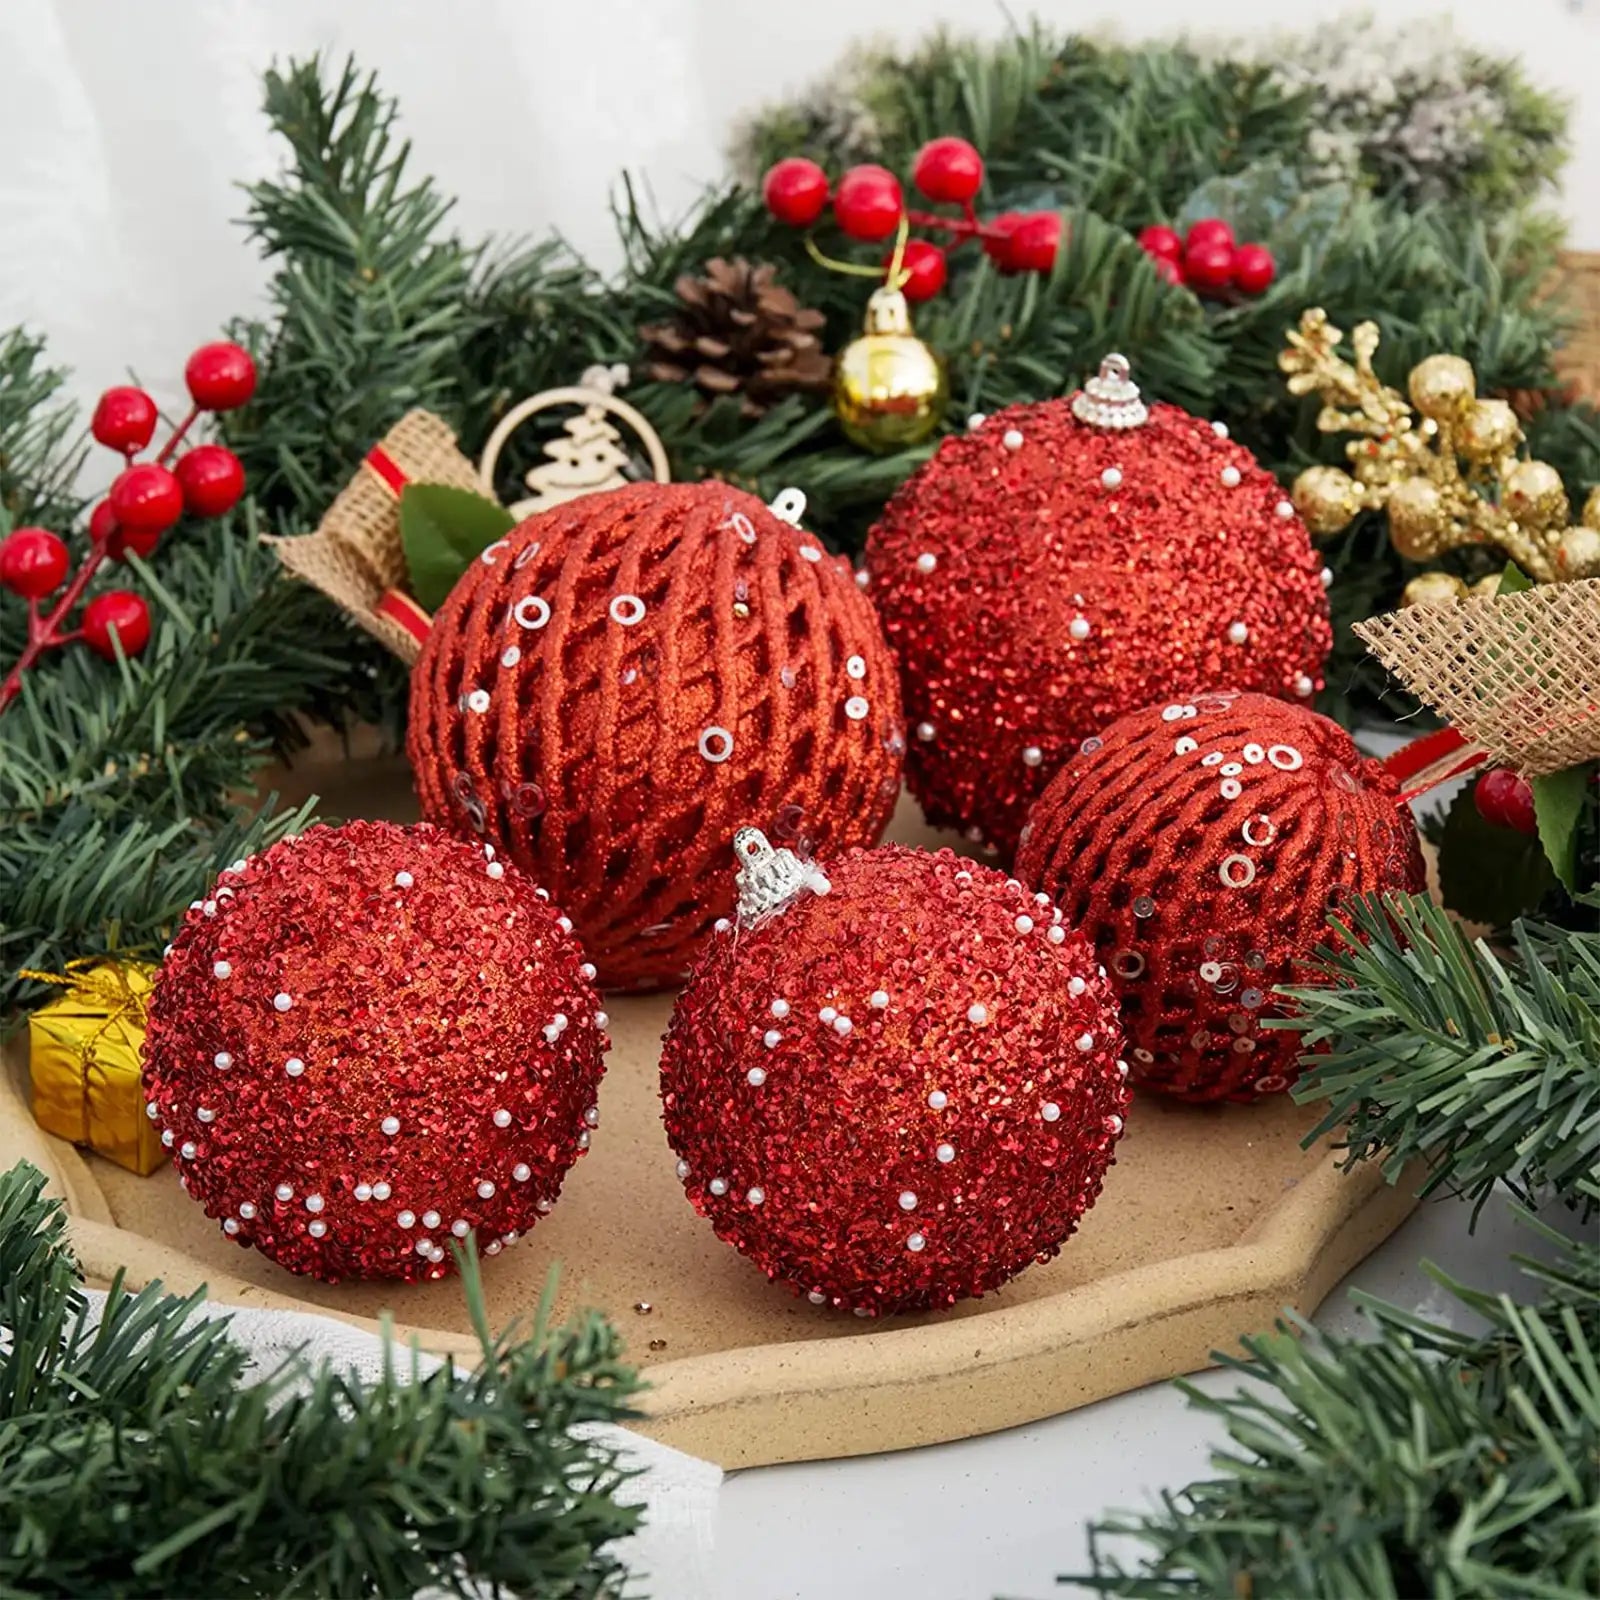 3.15" Christmas Ball Ornaments 12 pcs Glitter Sequin Foam Ball Shatterproof Christmas Decorations